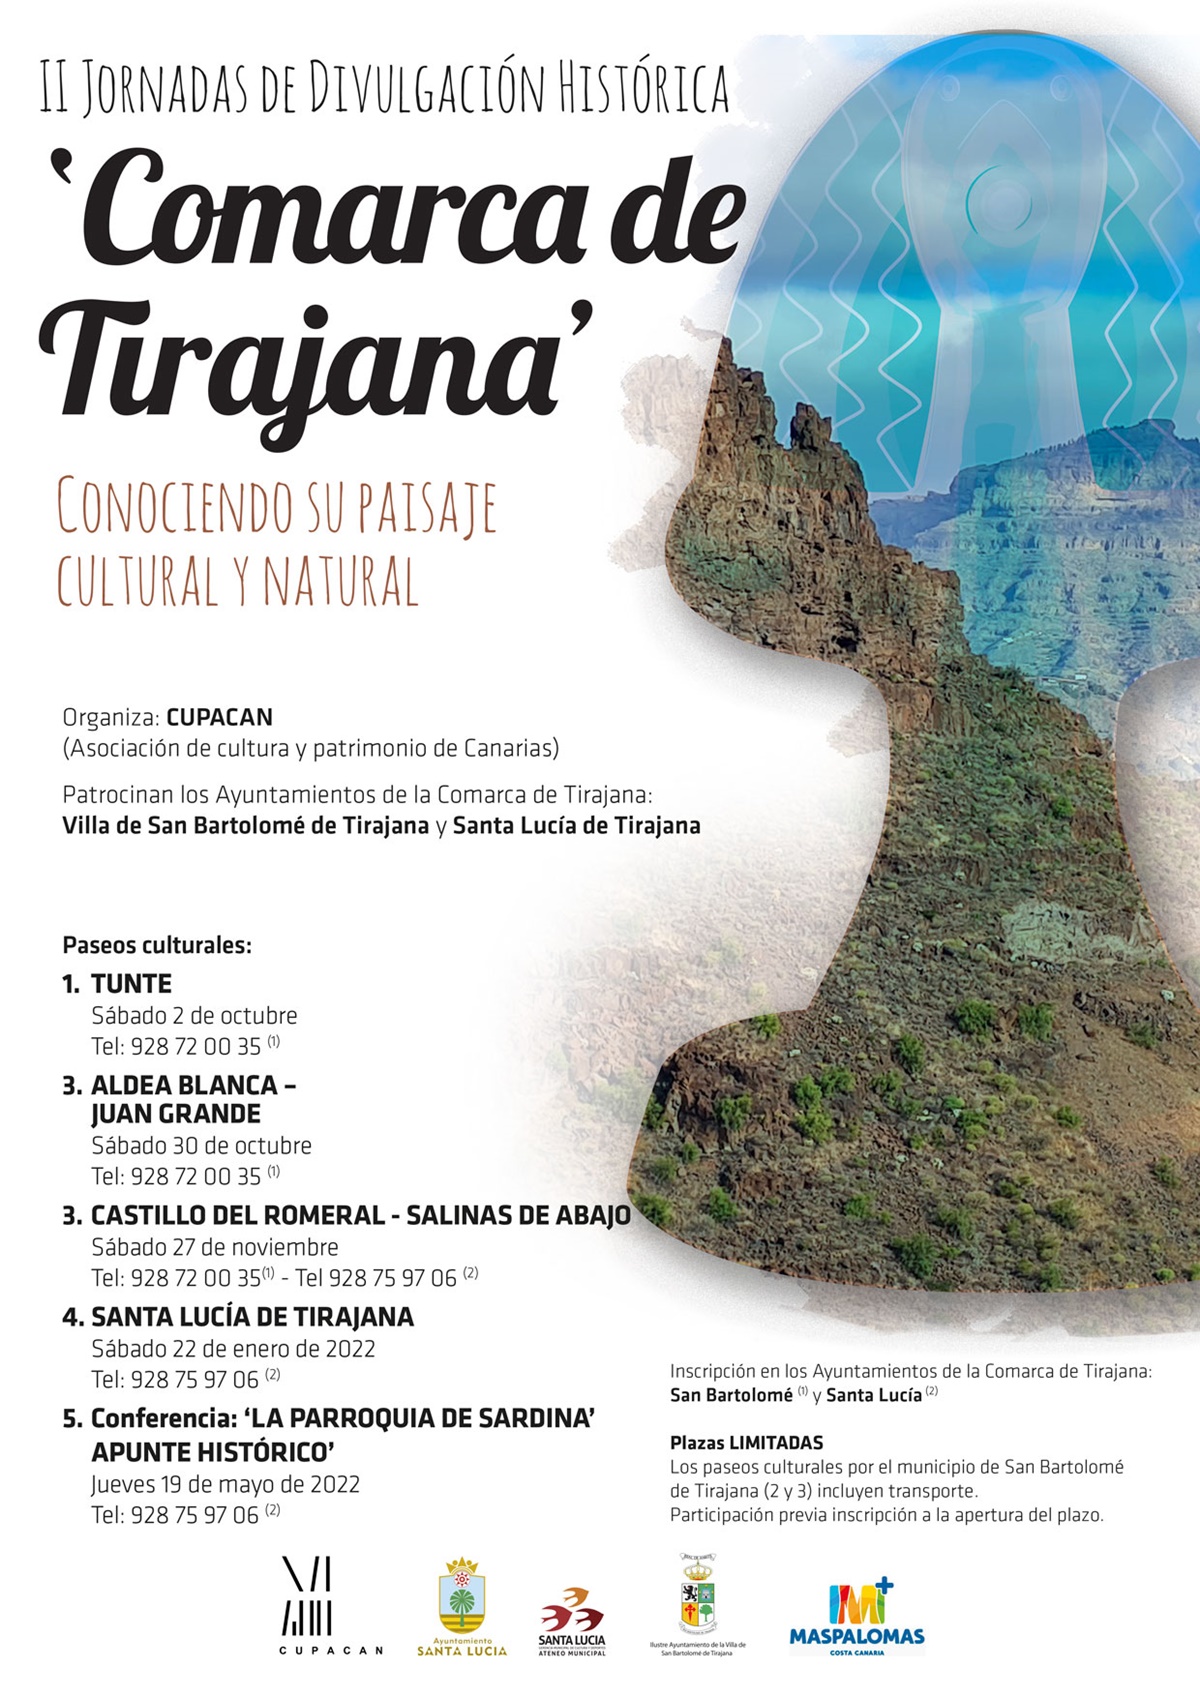 II Jornadas de Divulgación Histórica 'Comarca de Tirajana'